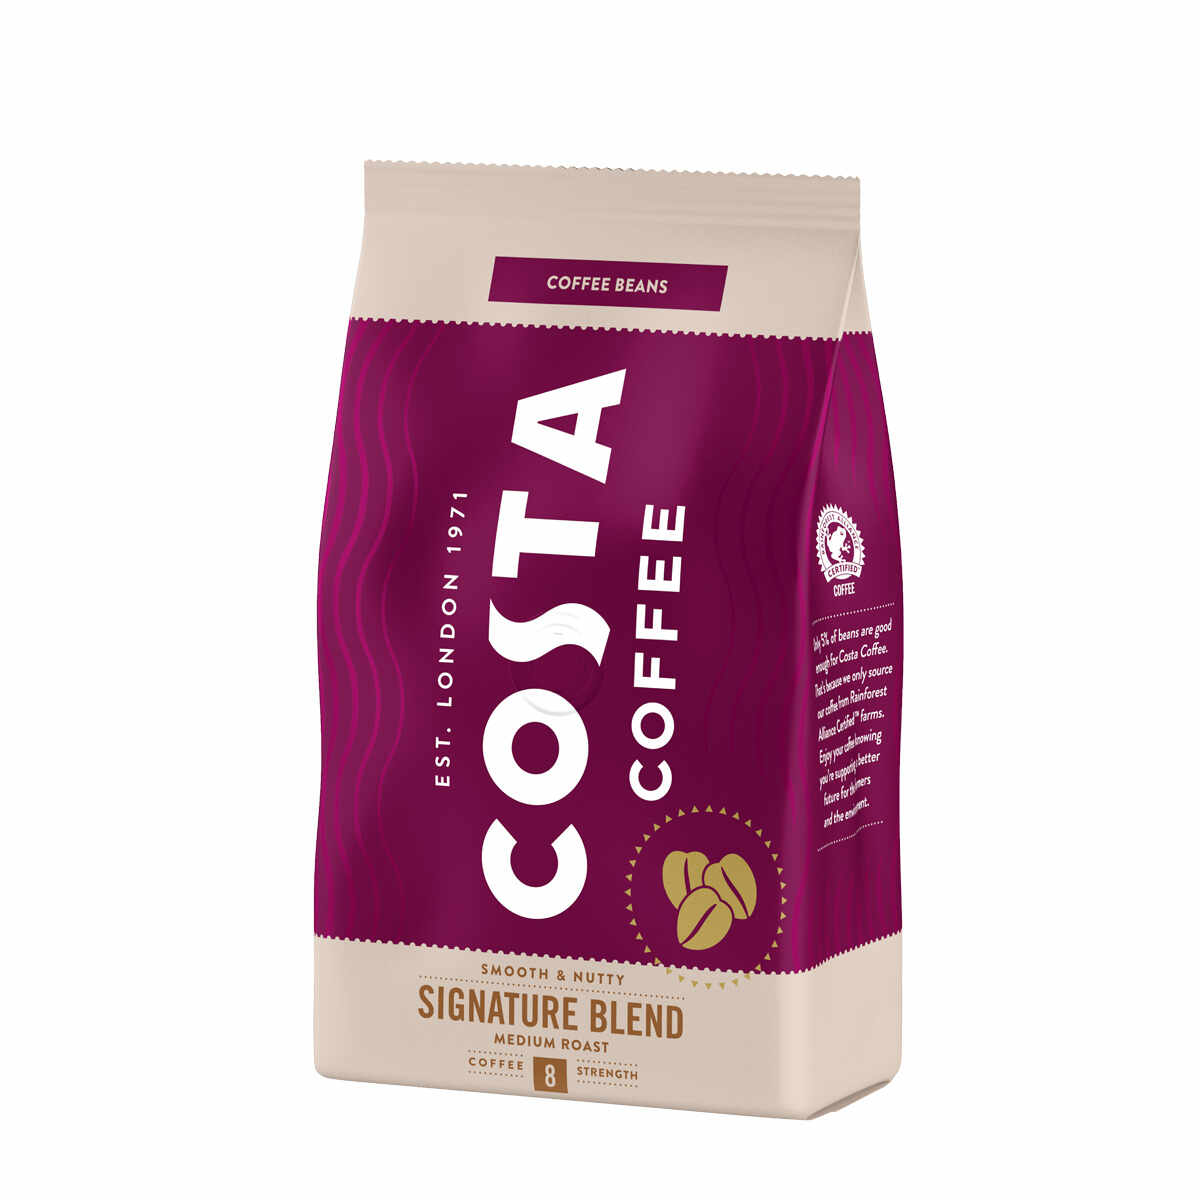 Costa Signature Blend Medium Roast cafea boabe 500g